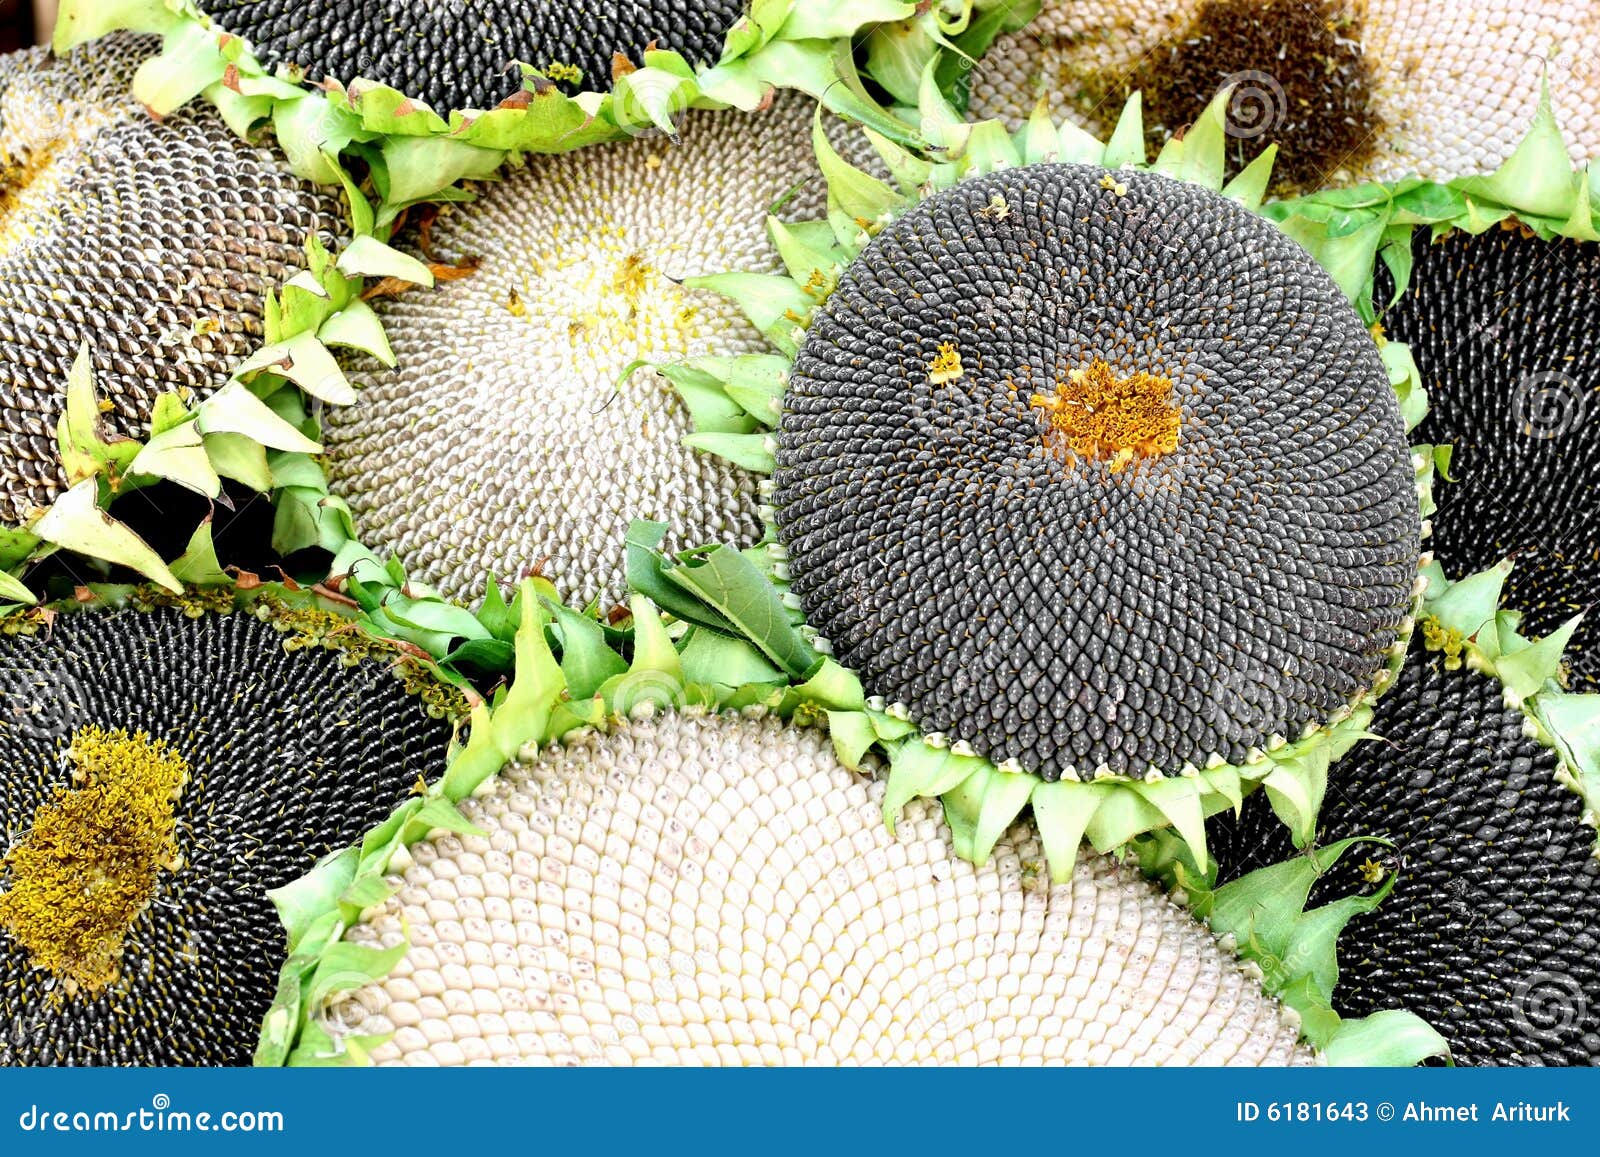 Seeds on sunflowers stock image. Image of display, black - 6181643